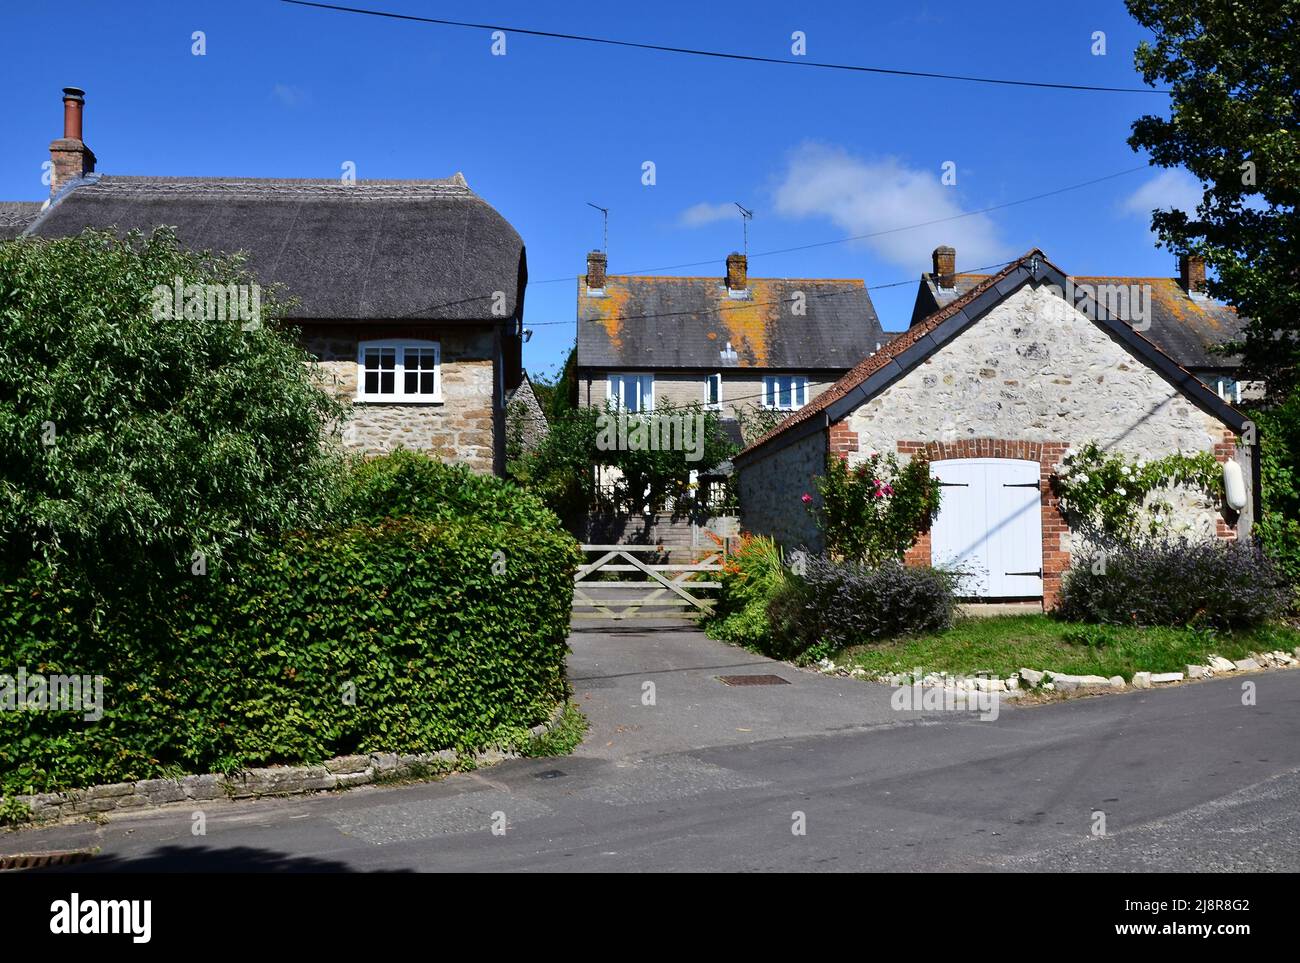 Litton Cheyney village in West Dorset, UK Stock Photo